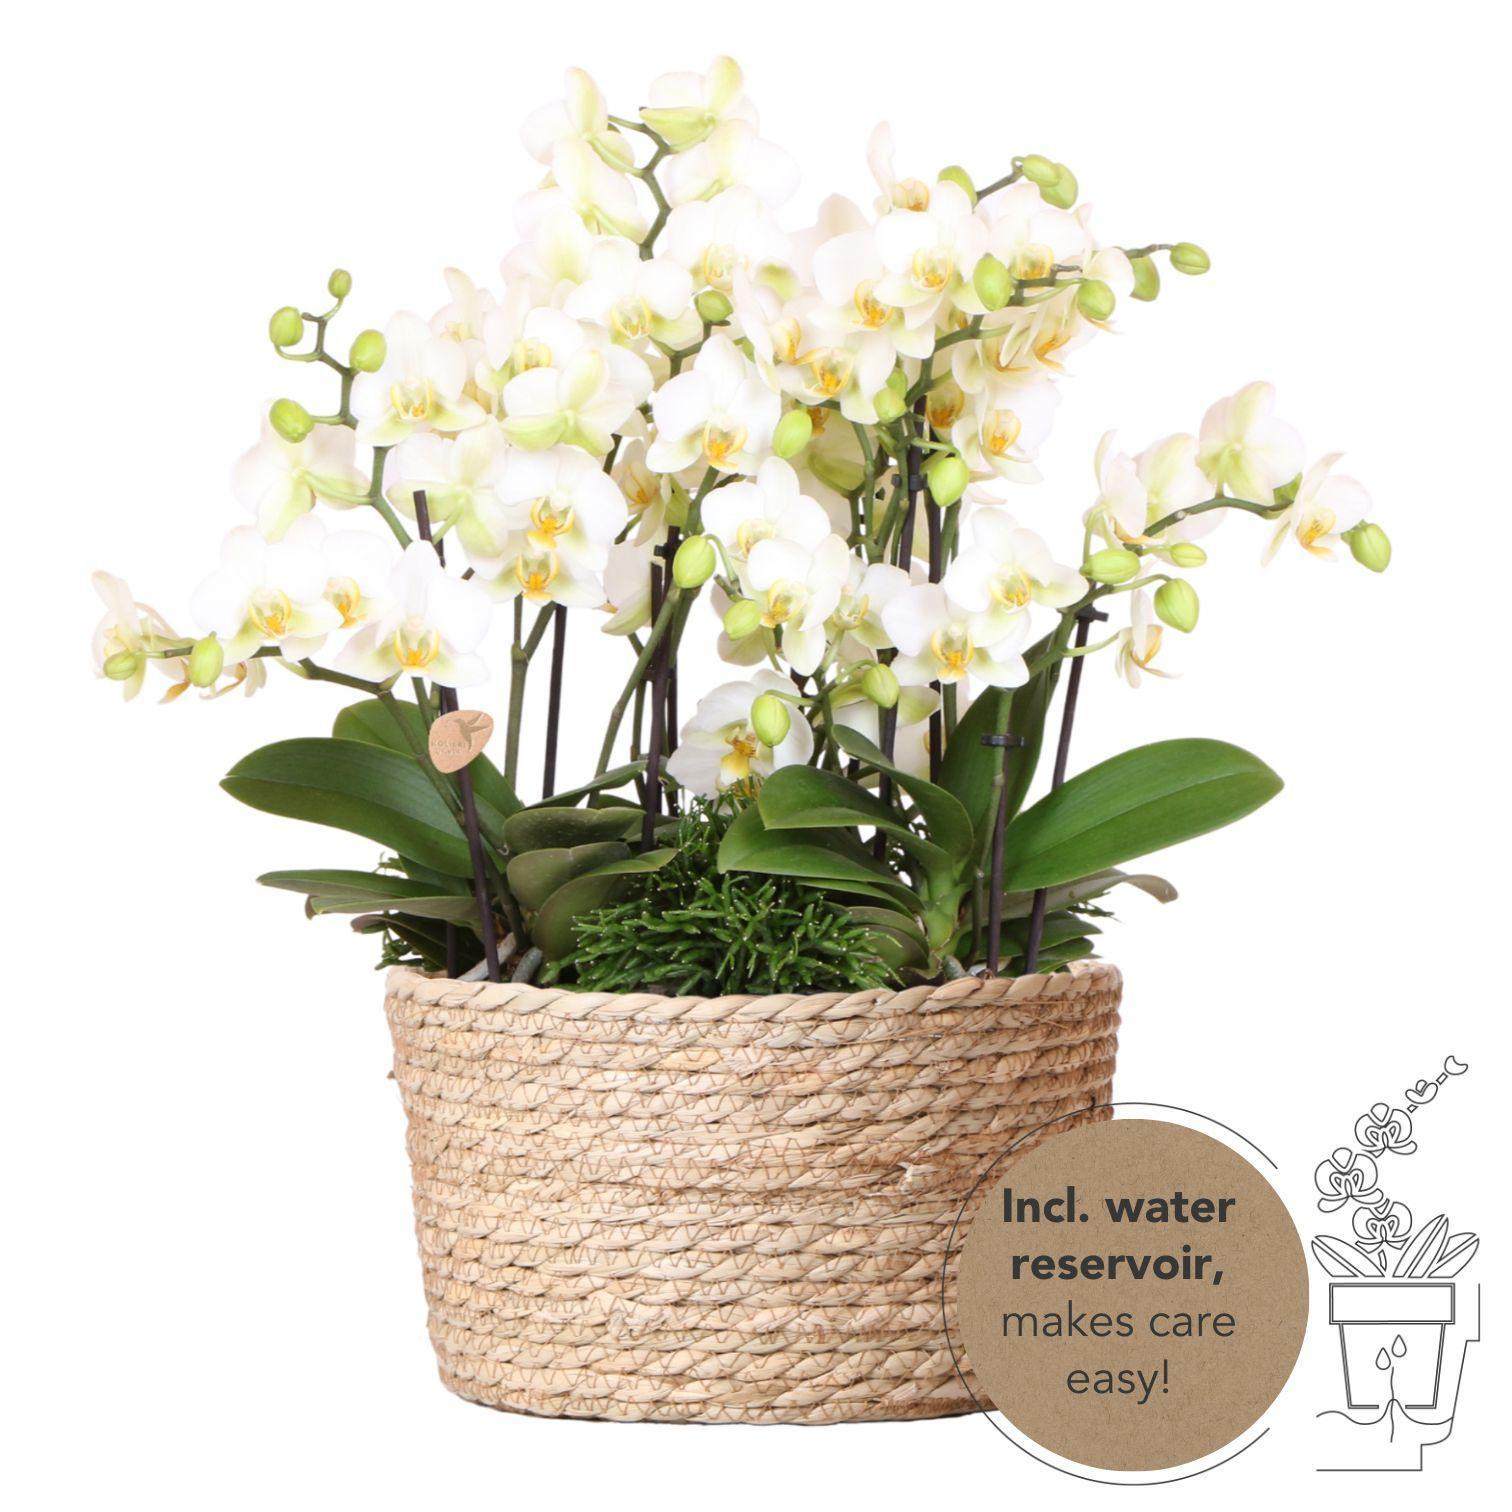 Everspring Witte plantenset in reed basket incl. Waterreservoir | drie witte orchideeën lausanne 9cm en drie groene planten rhipsalis | jungle bouquet wit met zelfvoorzienend water